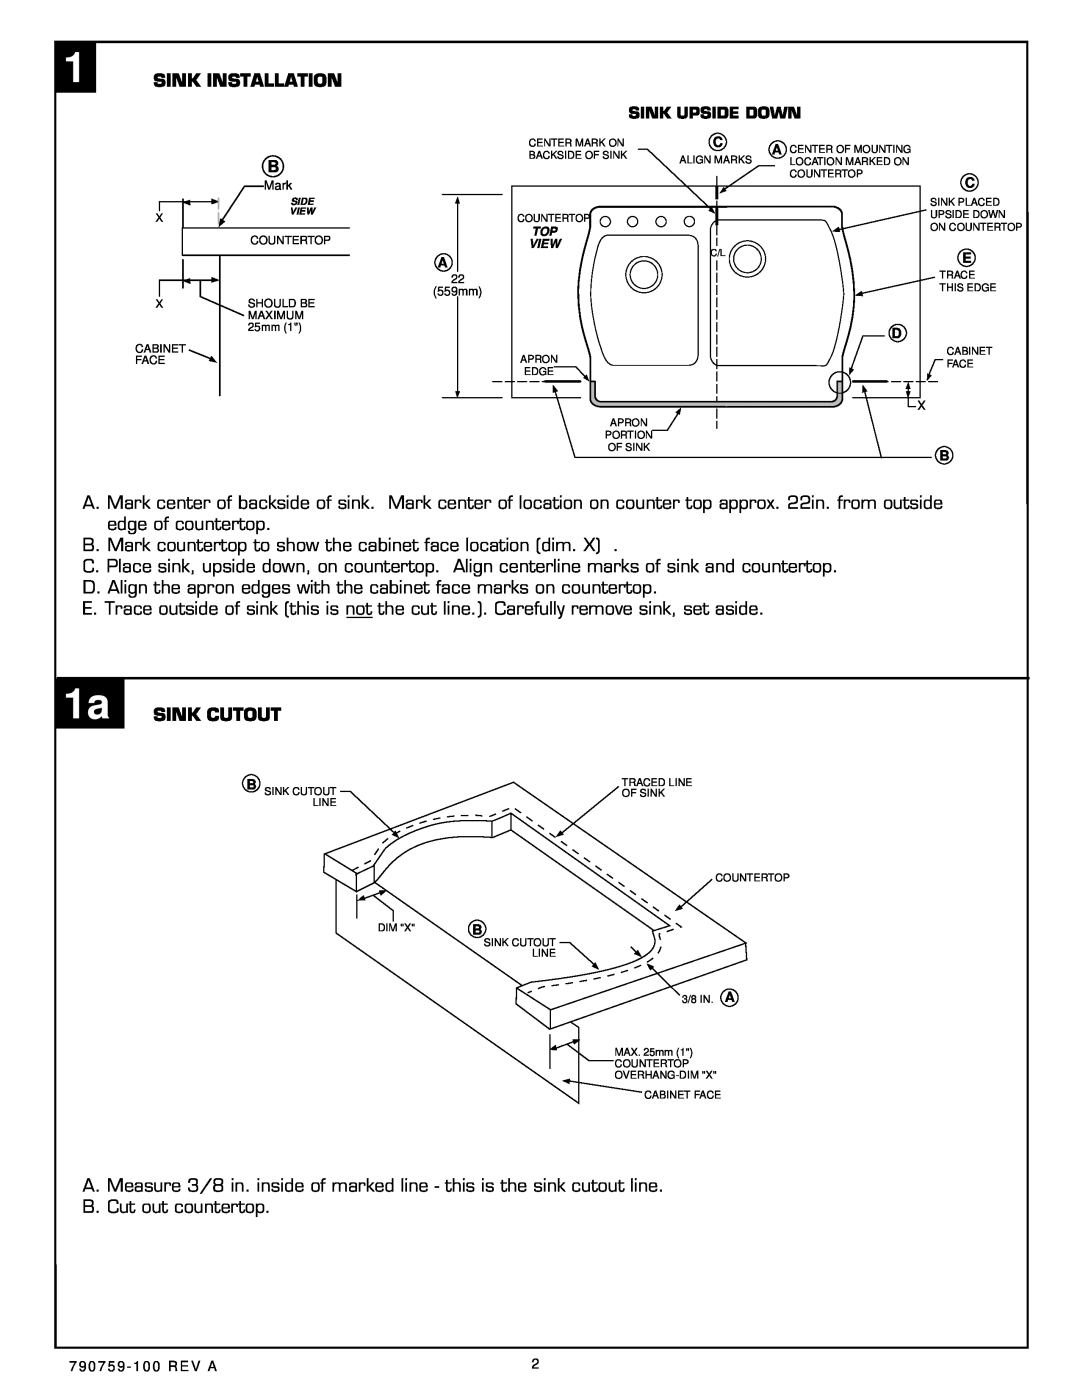 American Standard 7048 Series installation instructions Sink Installation, 1a SINK CUTOUT 